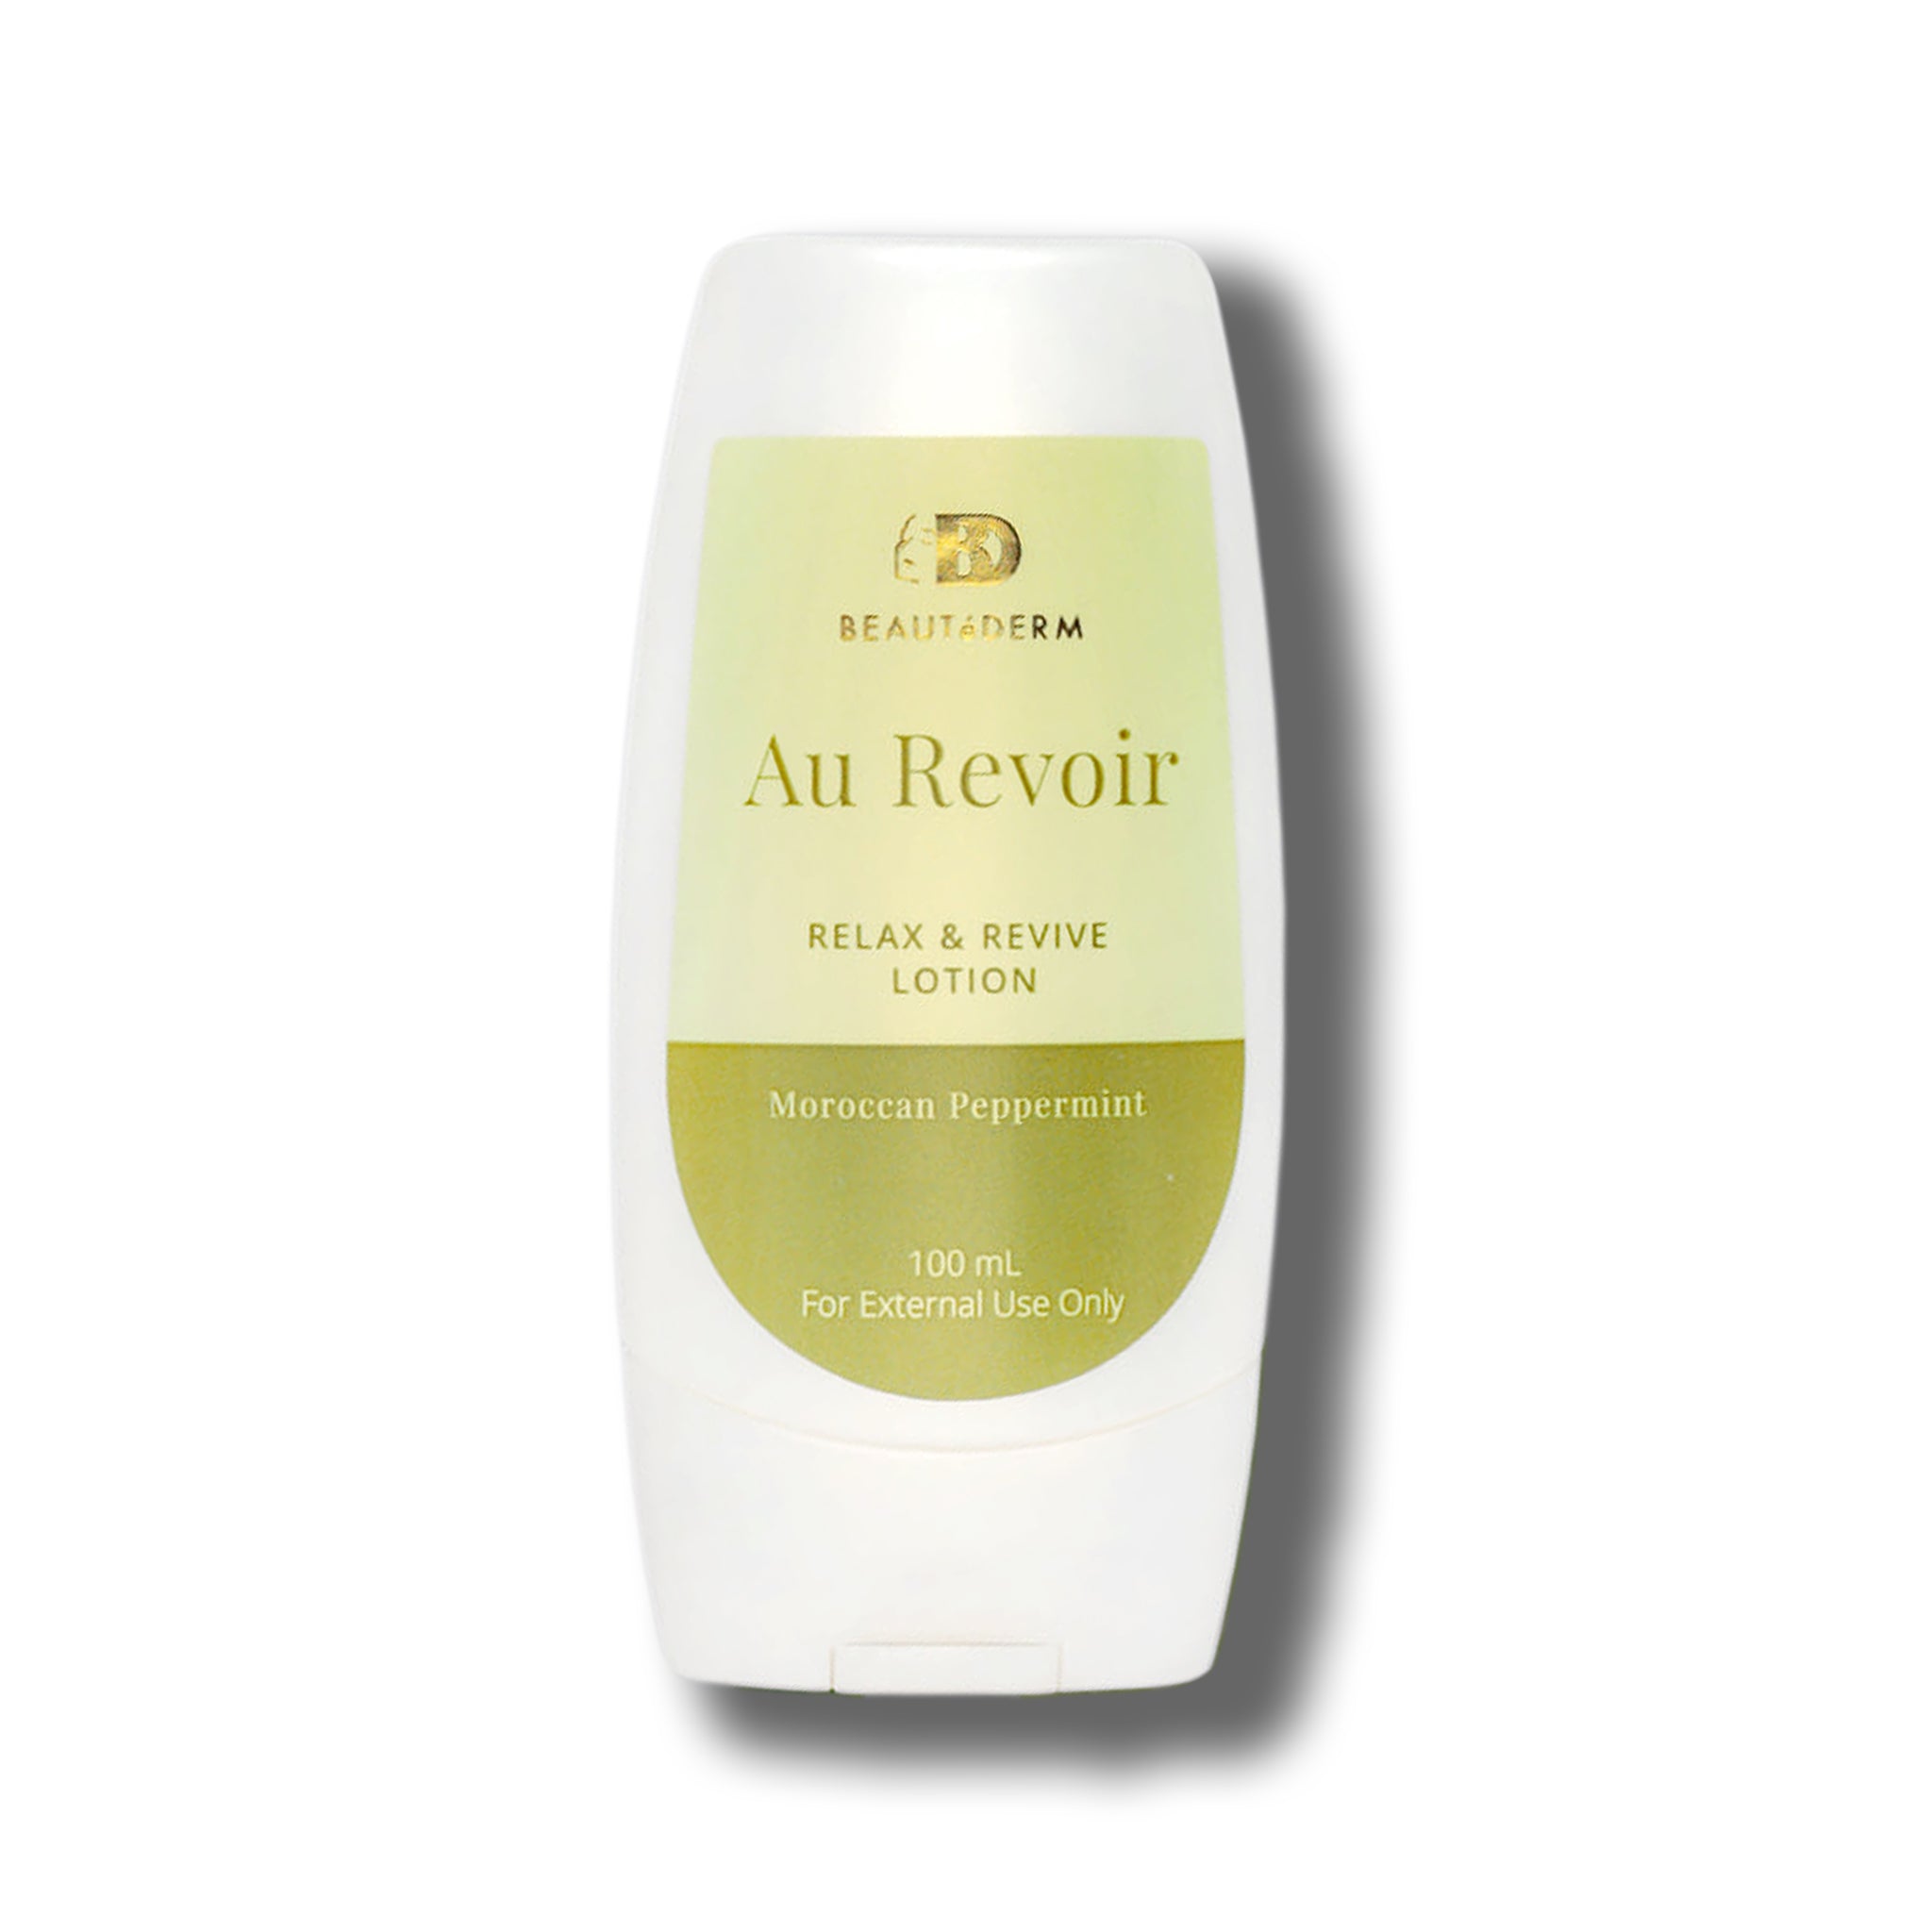 Au Revoir Relax & Revive Lotion, Moroccan Peppermint, 100ml, by Beautederm